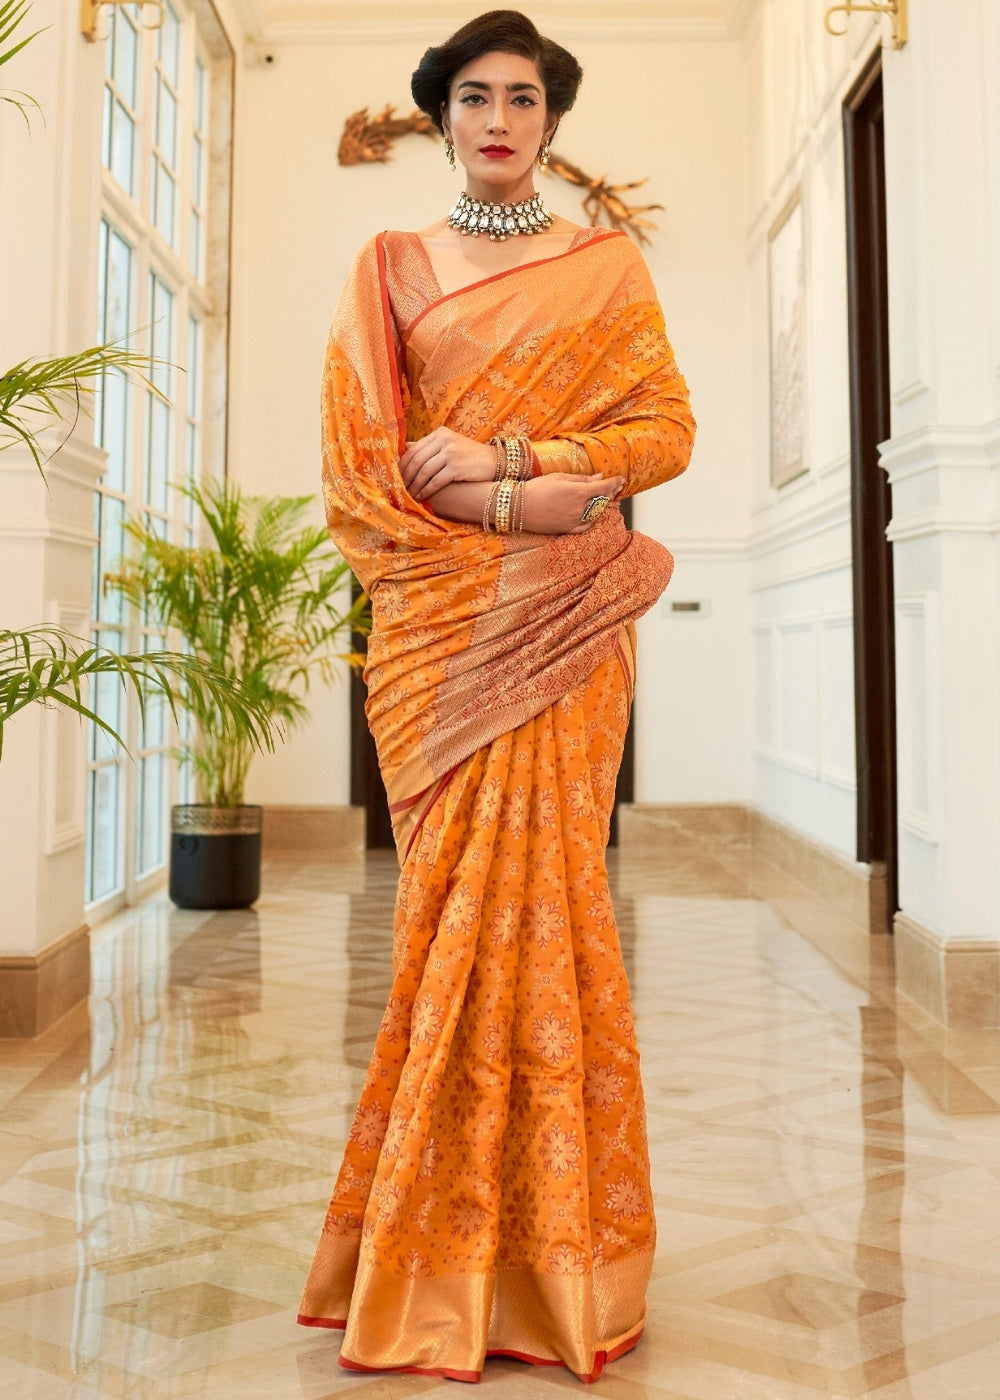 Orange Patola Silk Saree with Jaal work Border - Colorful Saree